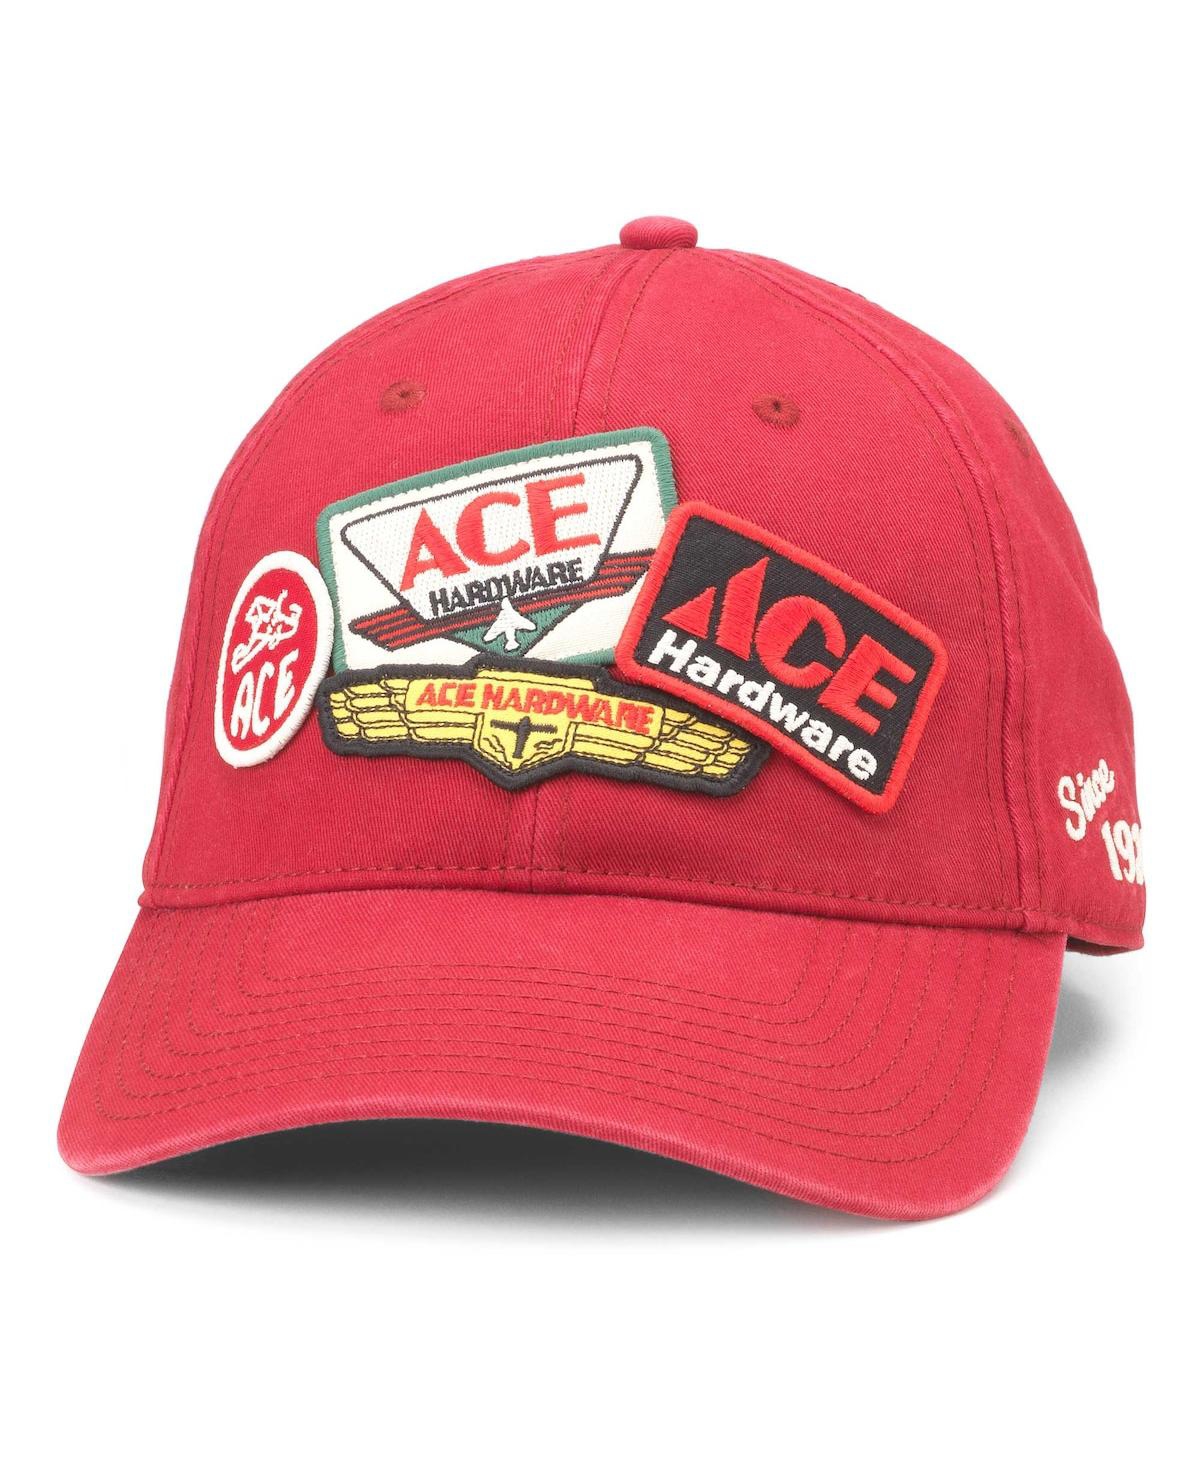 Men's Red Ace Hardware Iconic Adjustable Hat - Red, Black